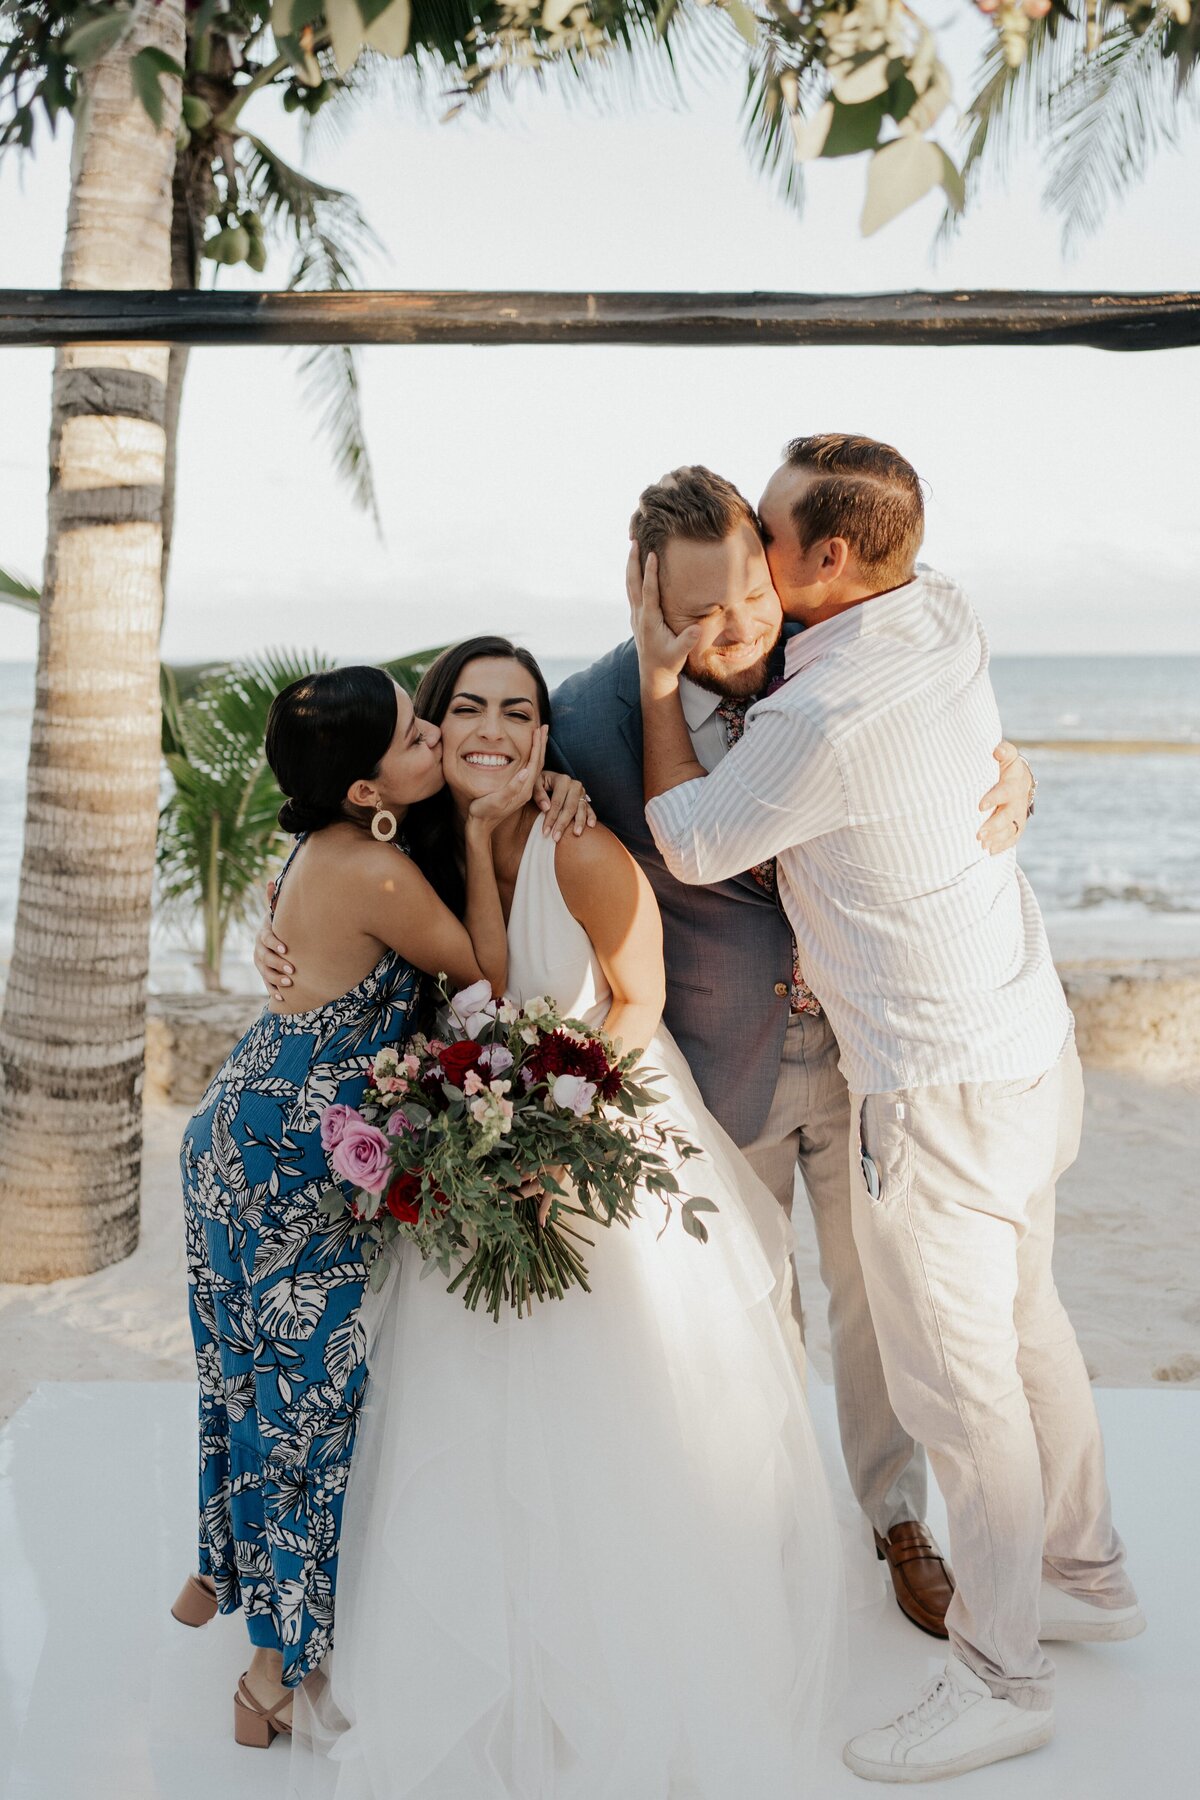 Imoni-Events-Arizona-and-Destination-Wedding-Planner-Four-Seasons-Cancun-Mexico-120